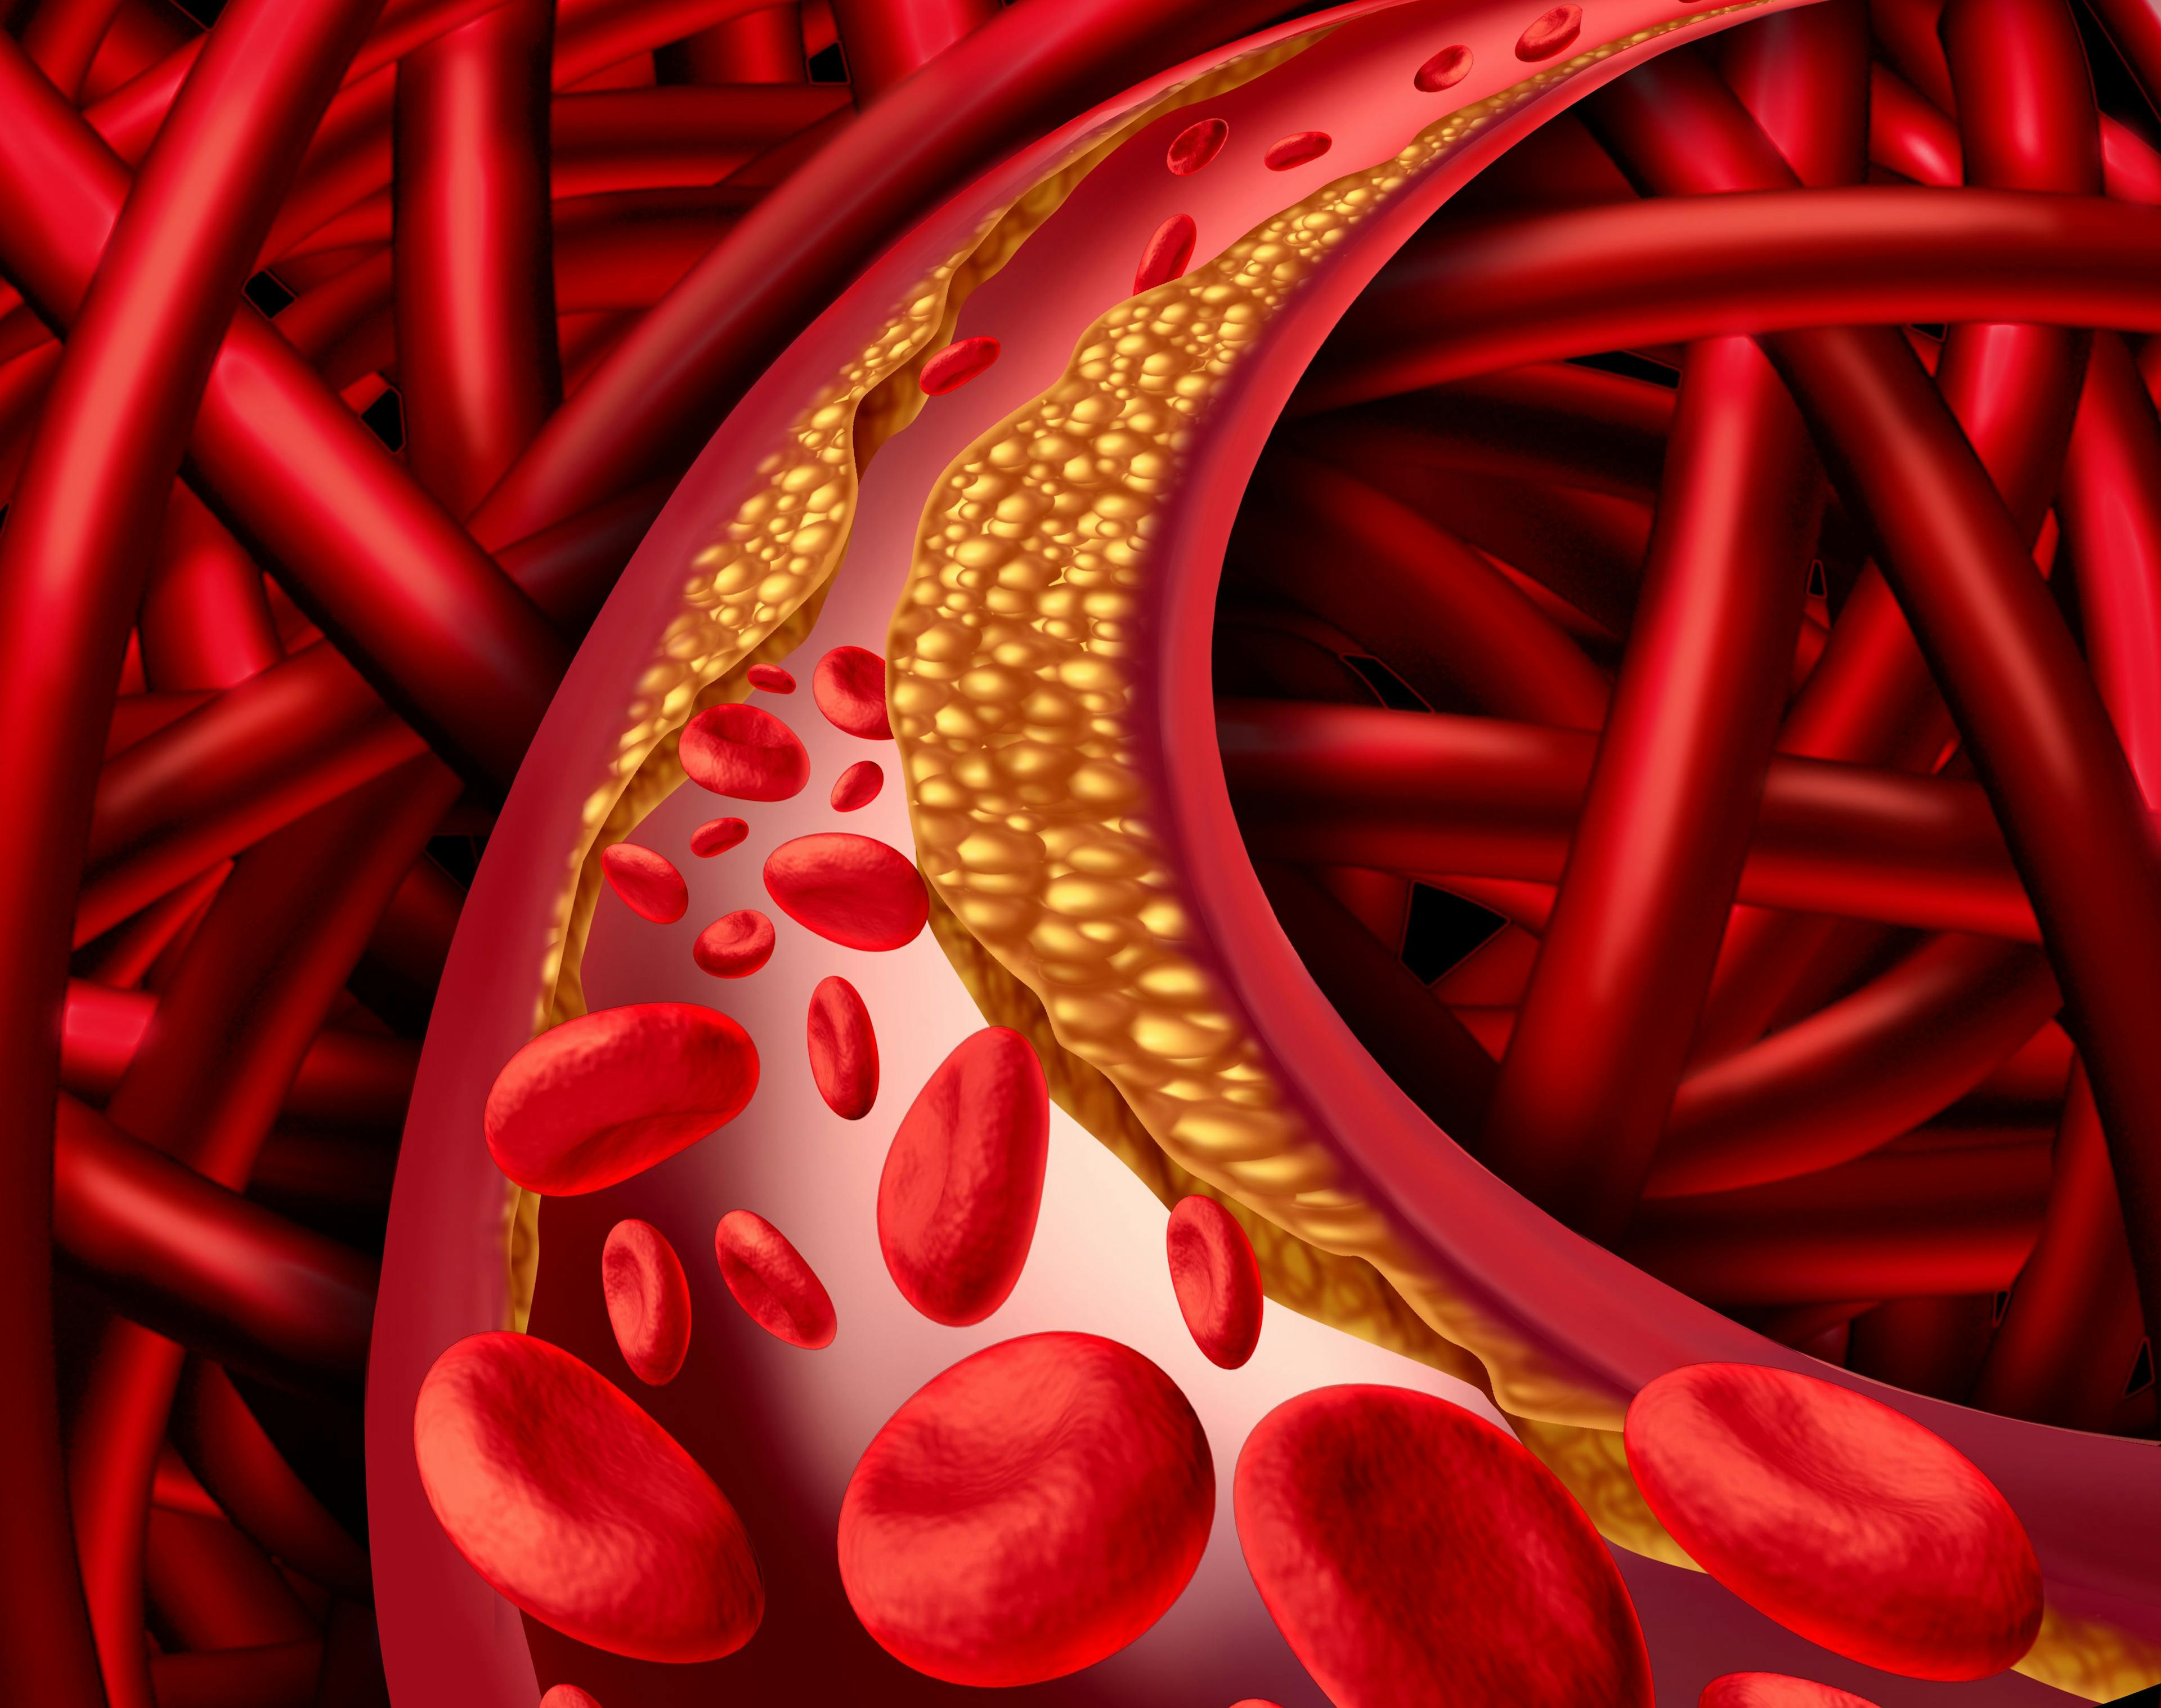 inflammatory activity in arteries